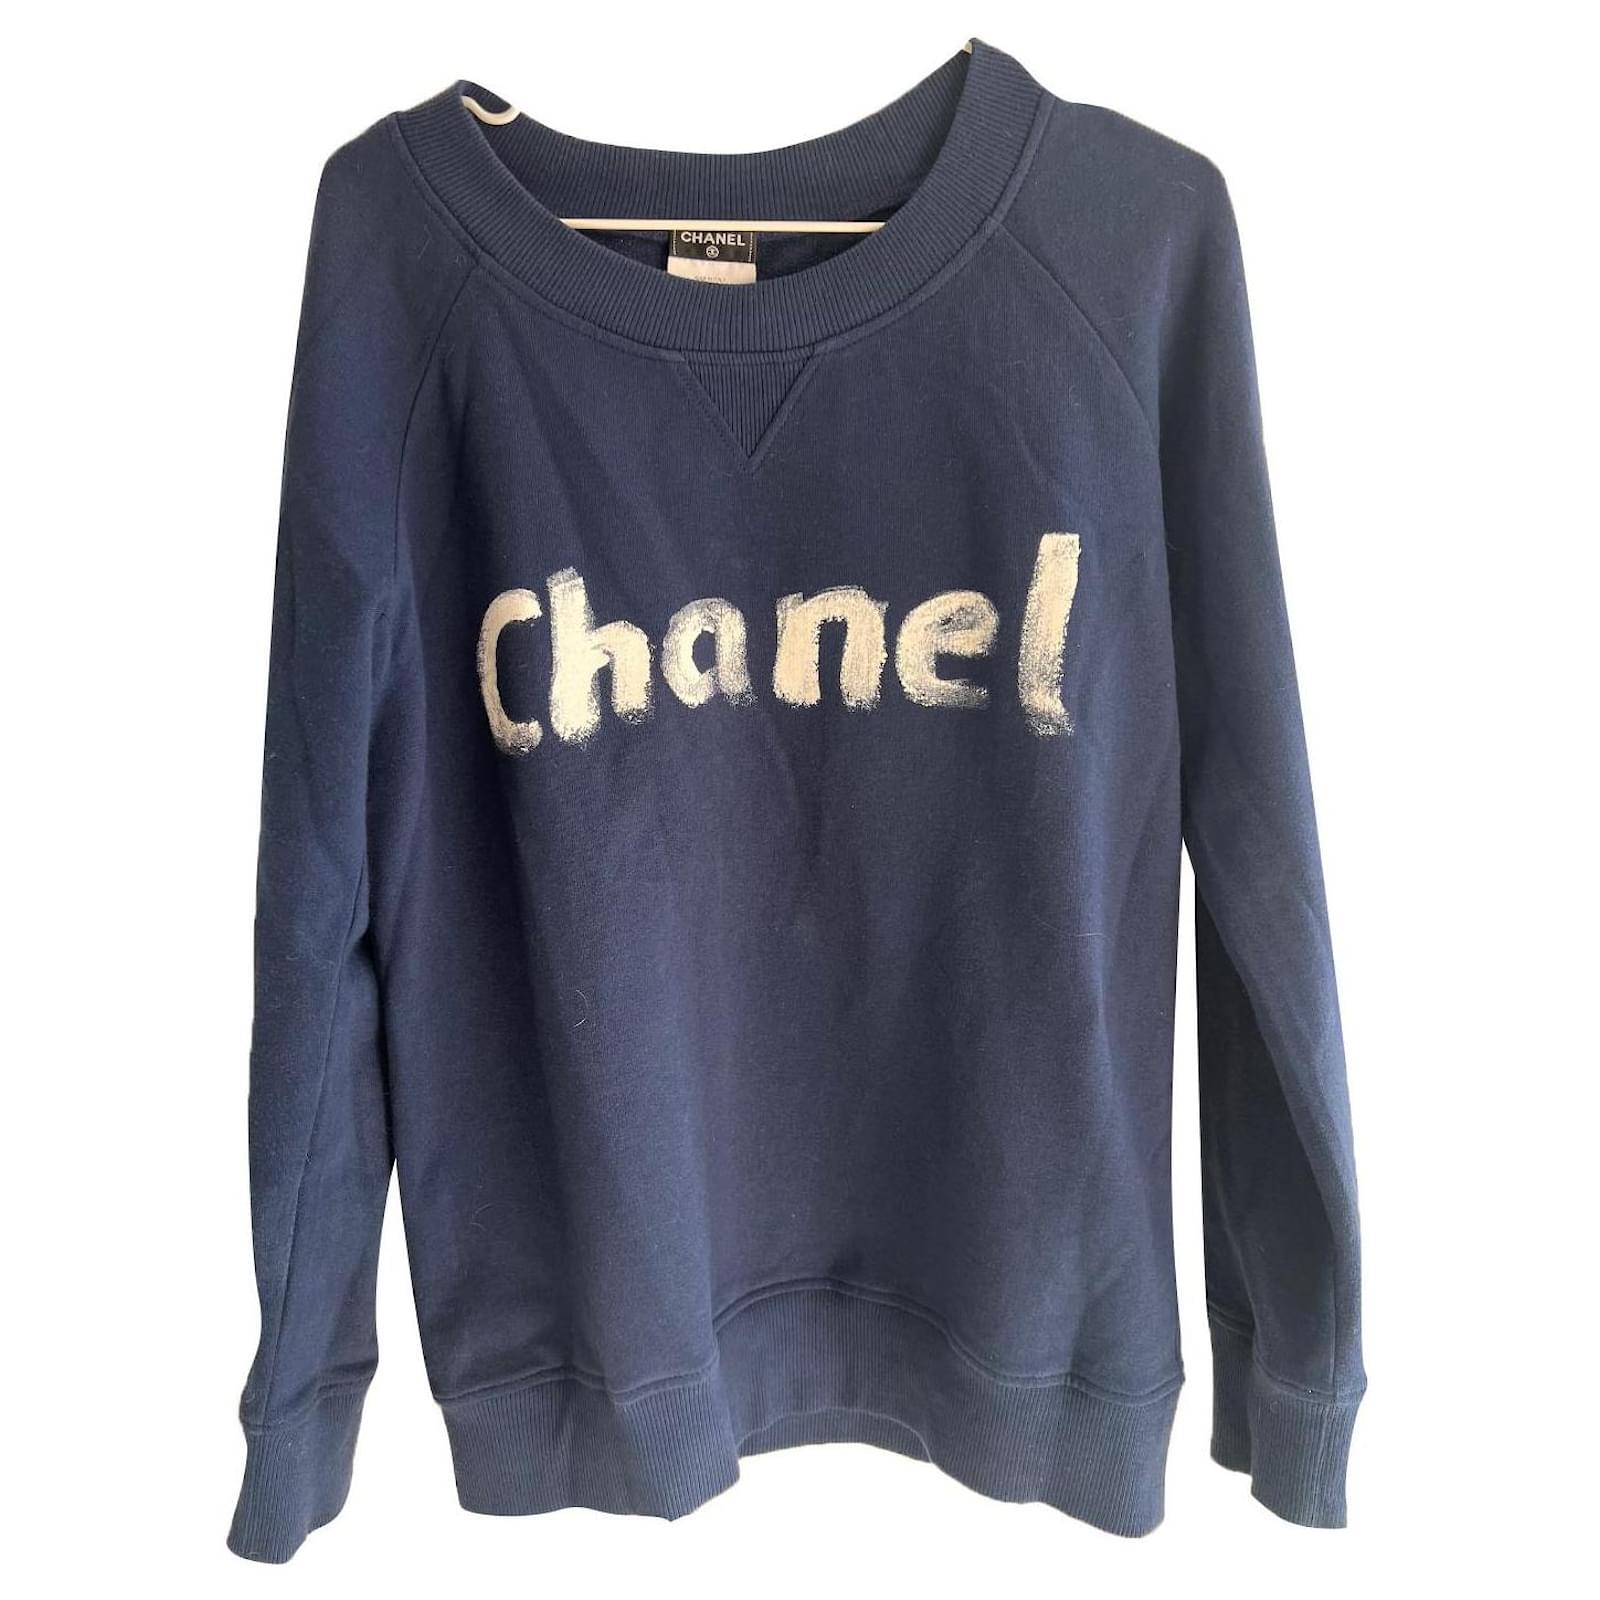 Design Chanel f1 price tshirtHoodie hoodie sweater long sleeve and  tank top